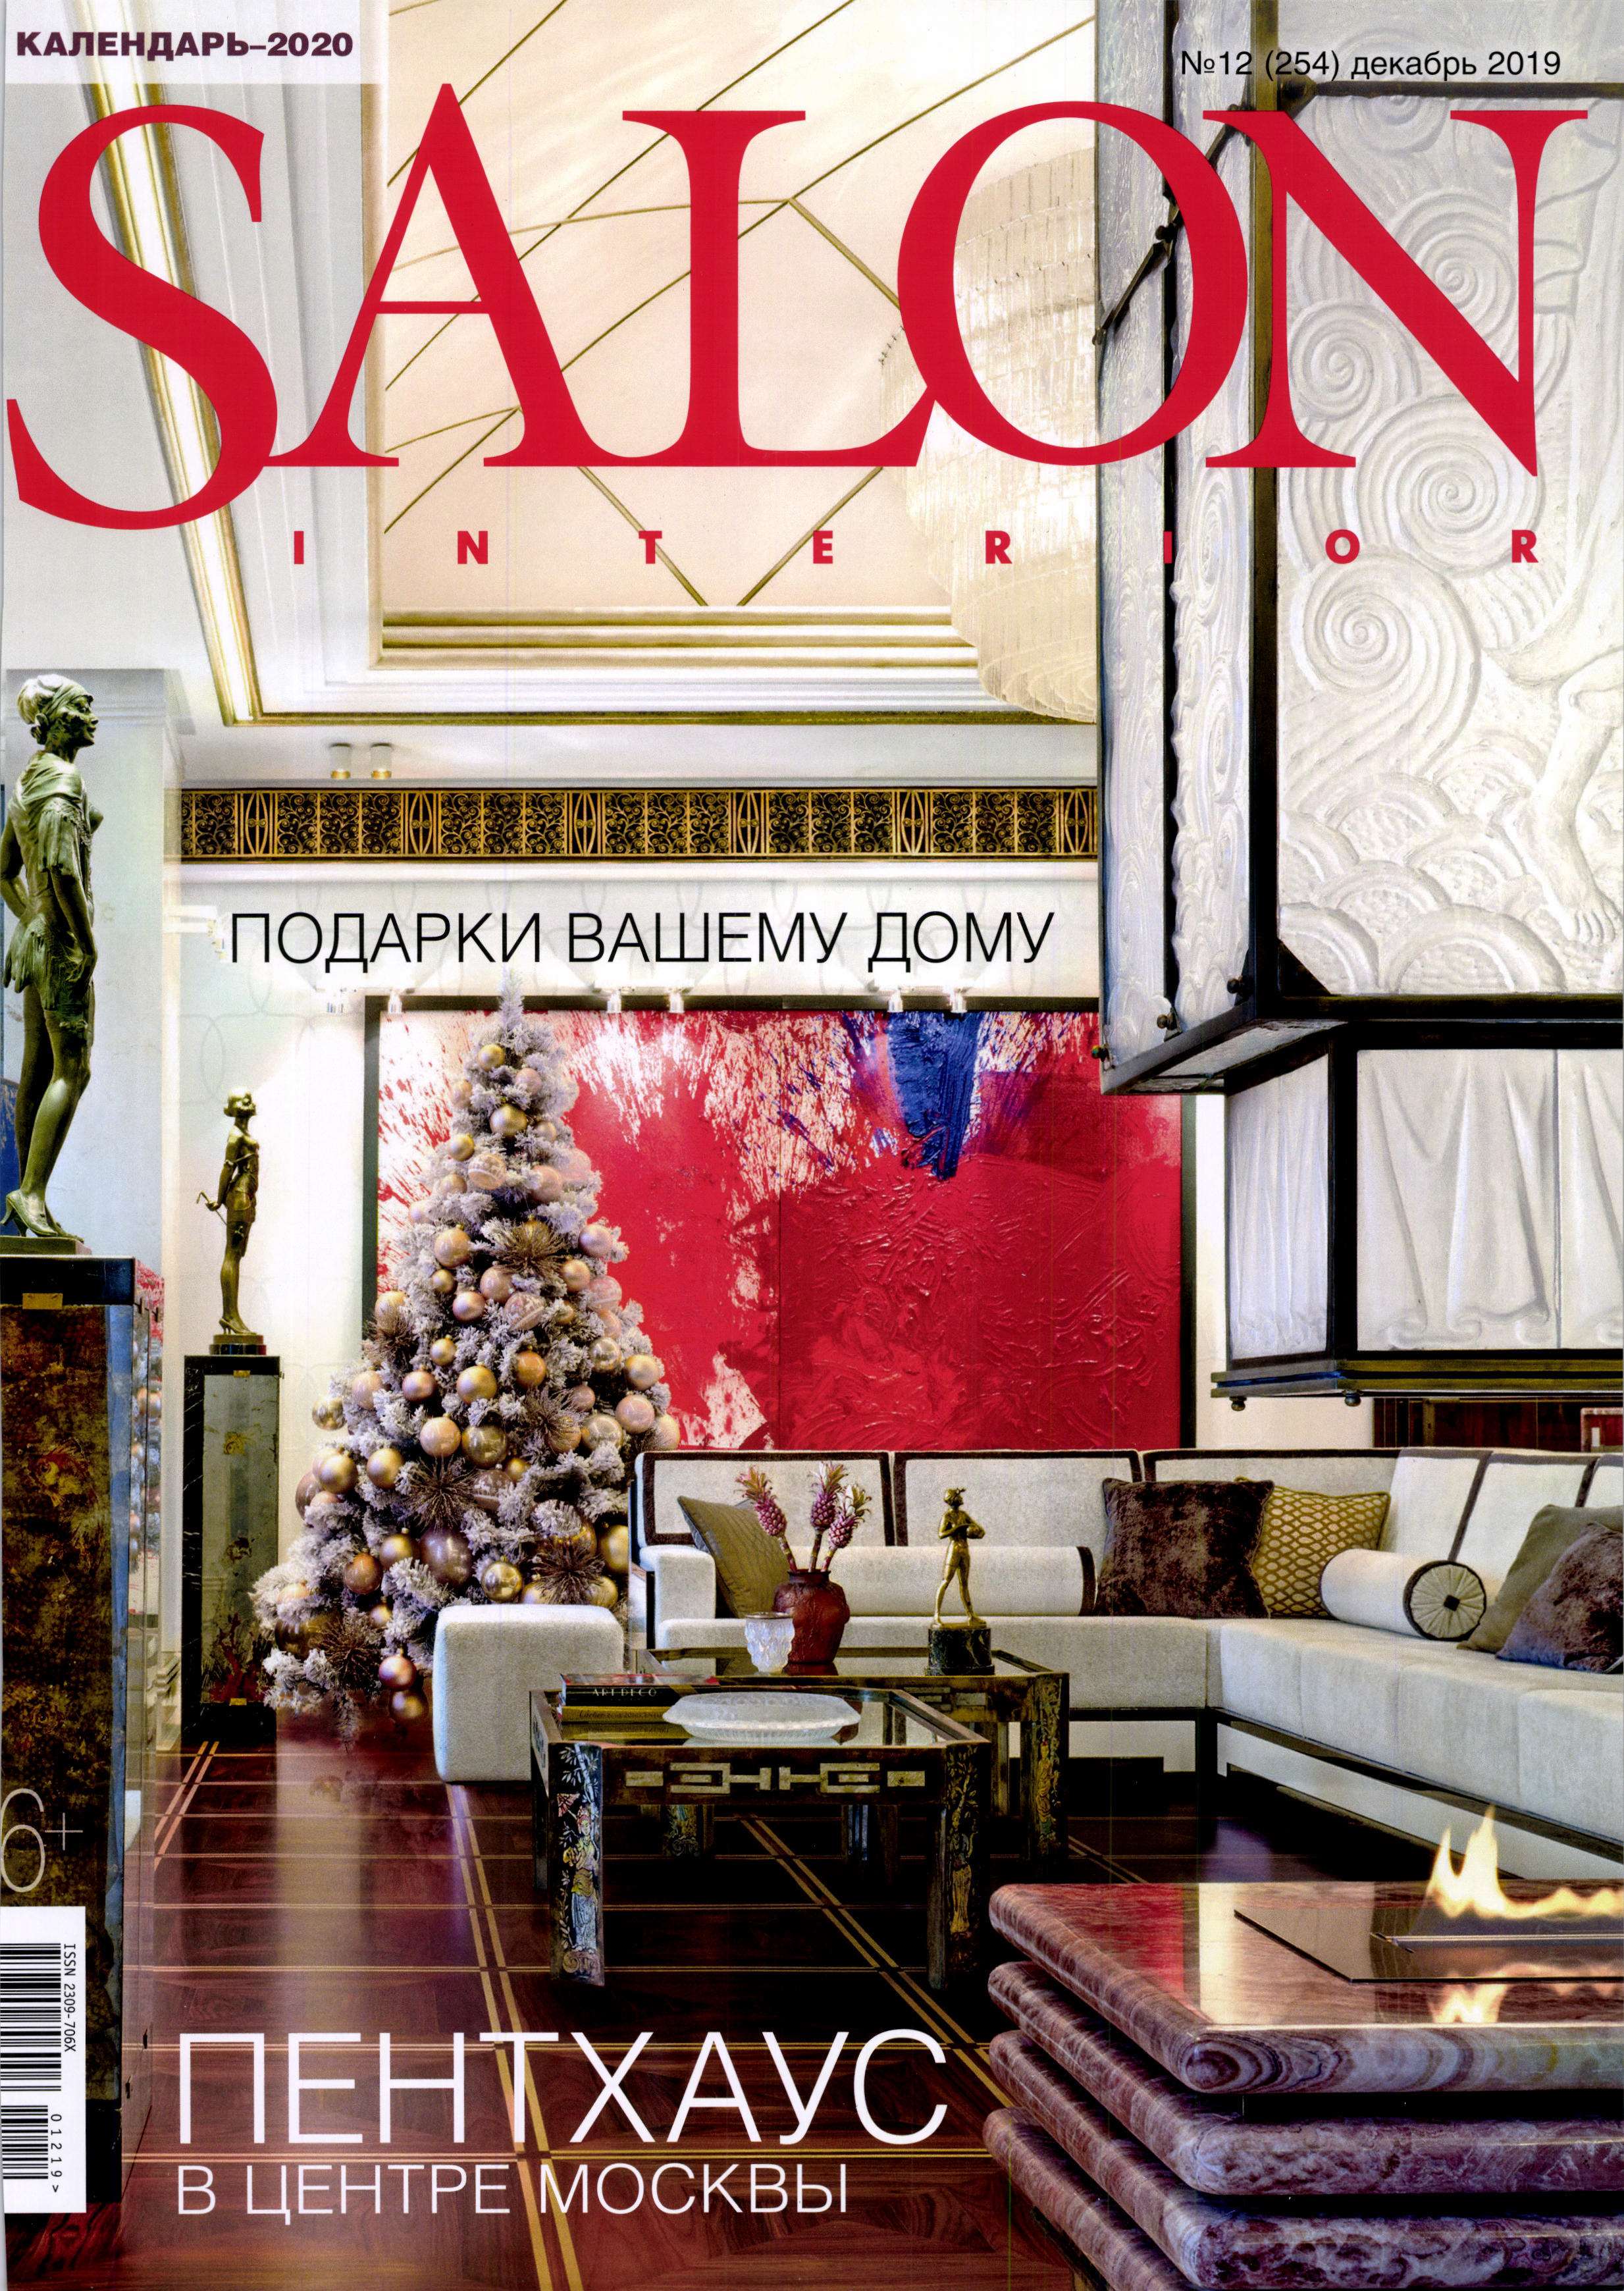 Salon Russia December 2019